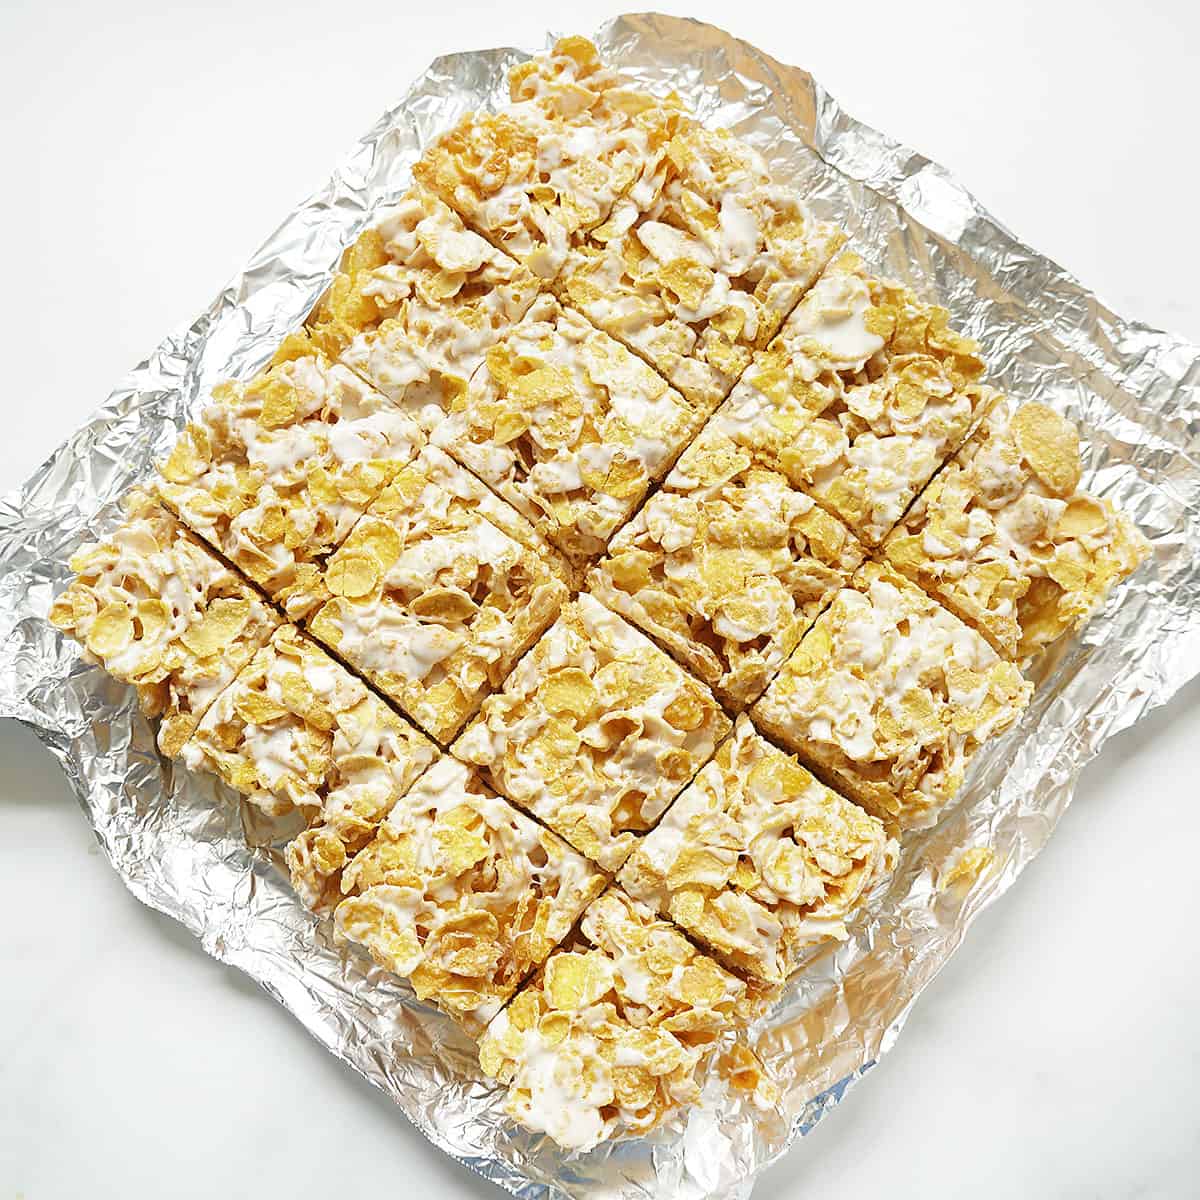 Corn Flakes treats cut in squares